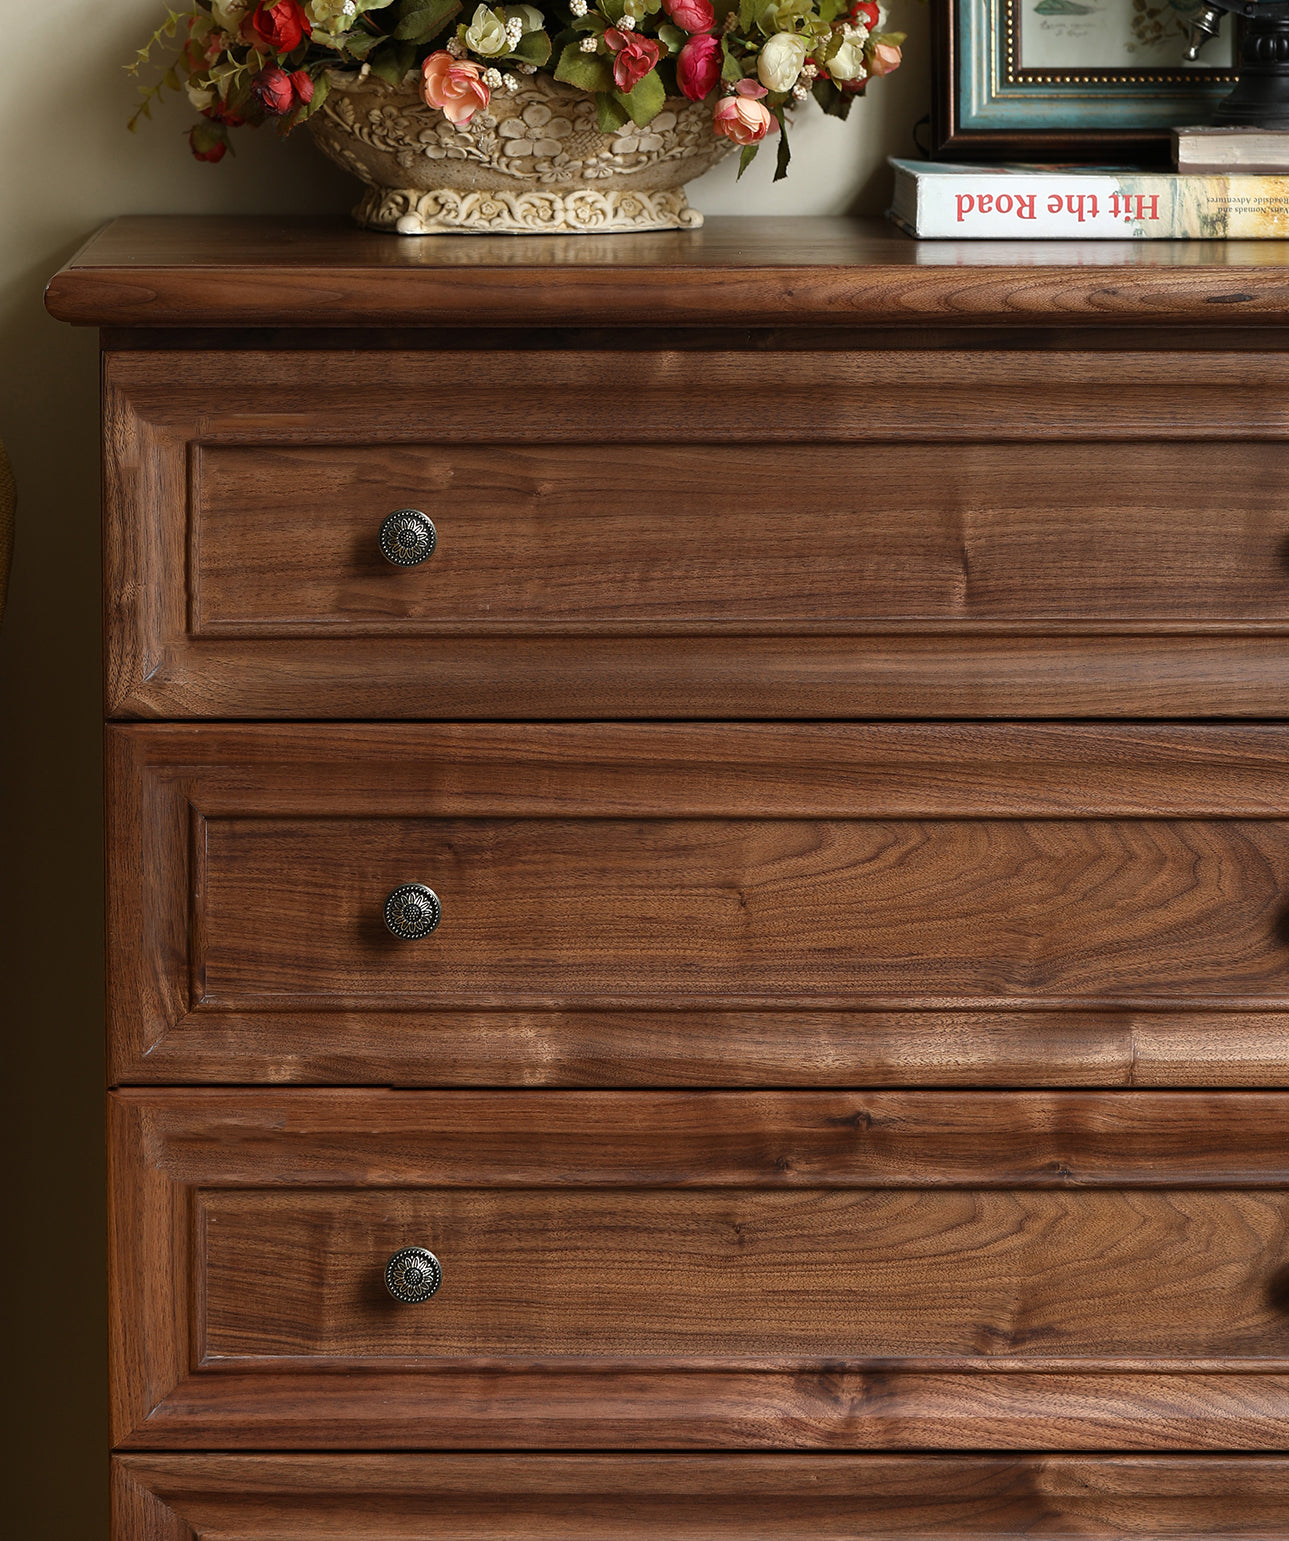 American style walnut wood dresser, vintage walnut dresser